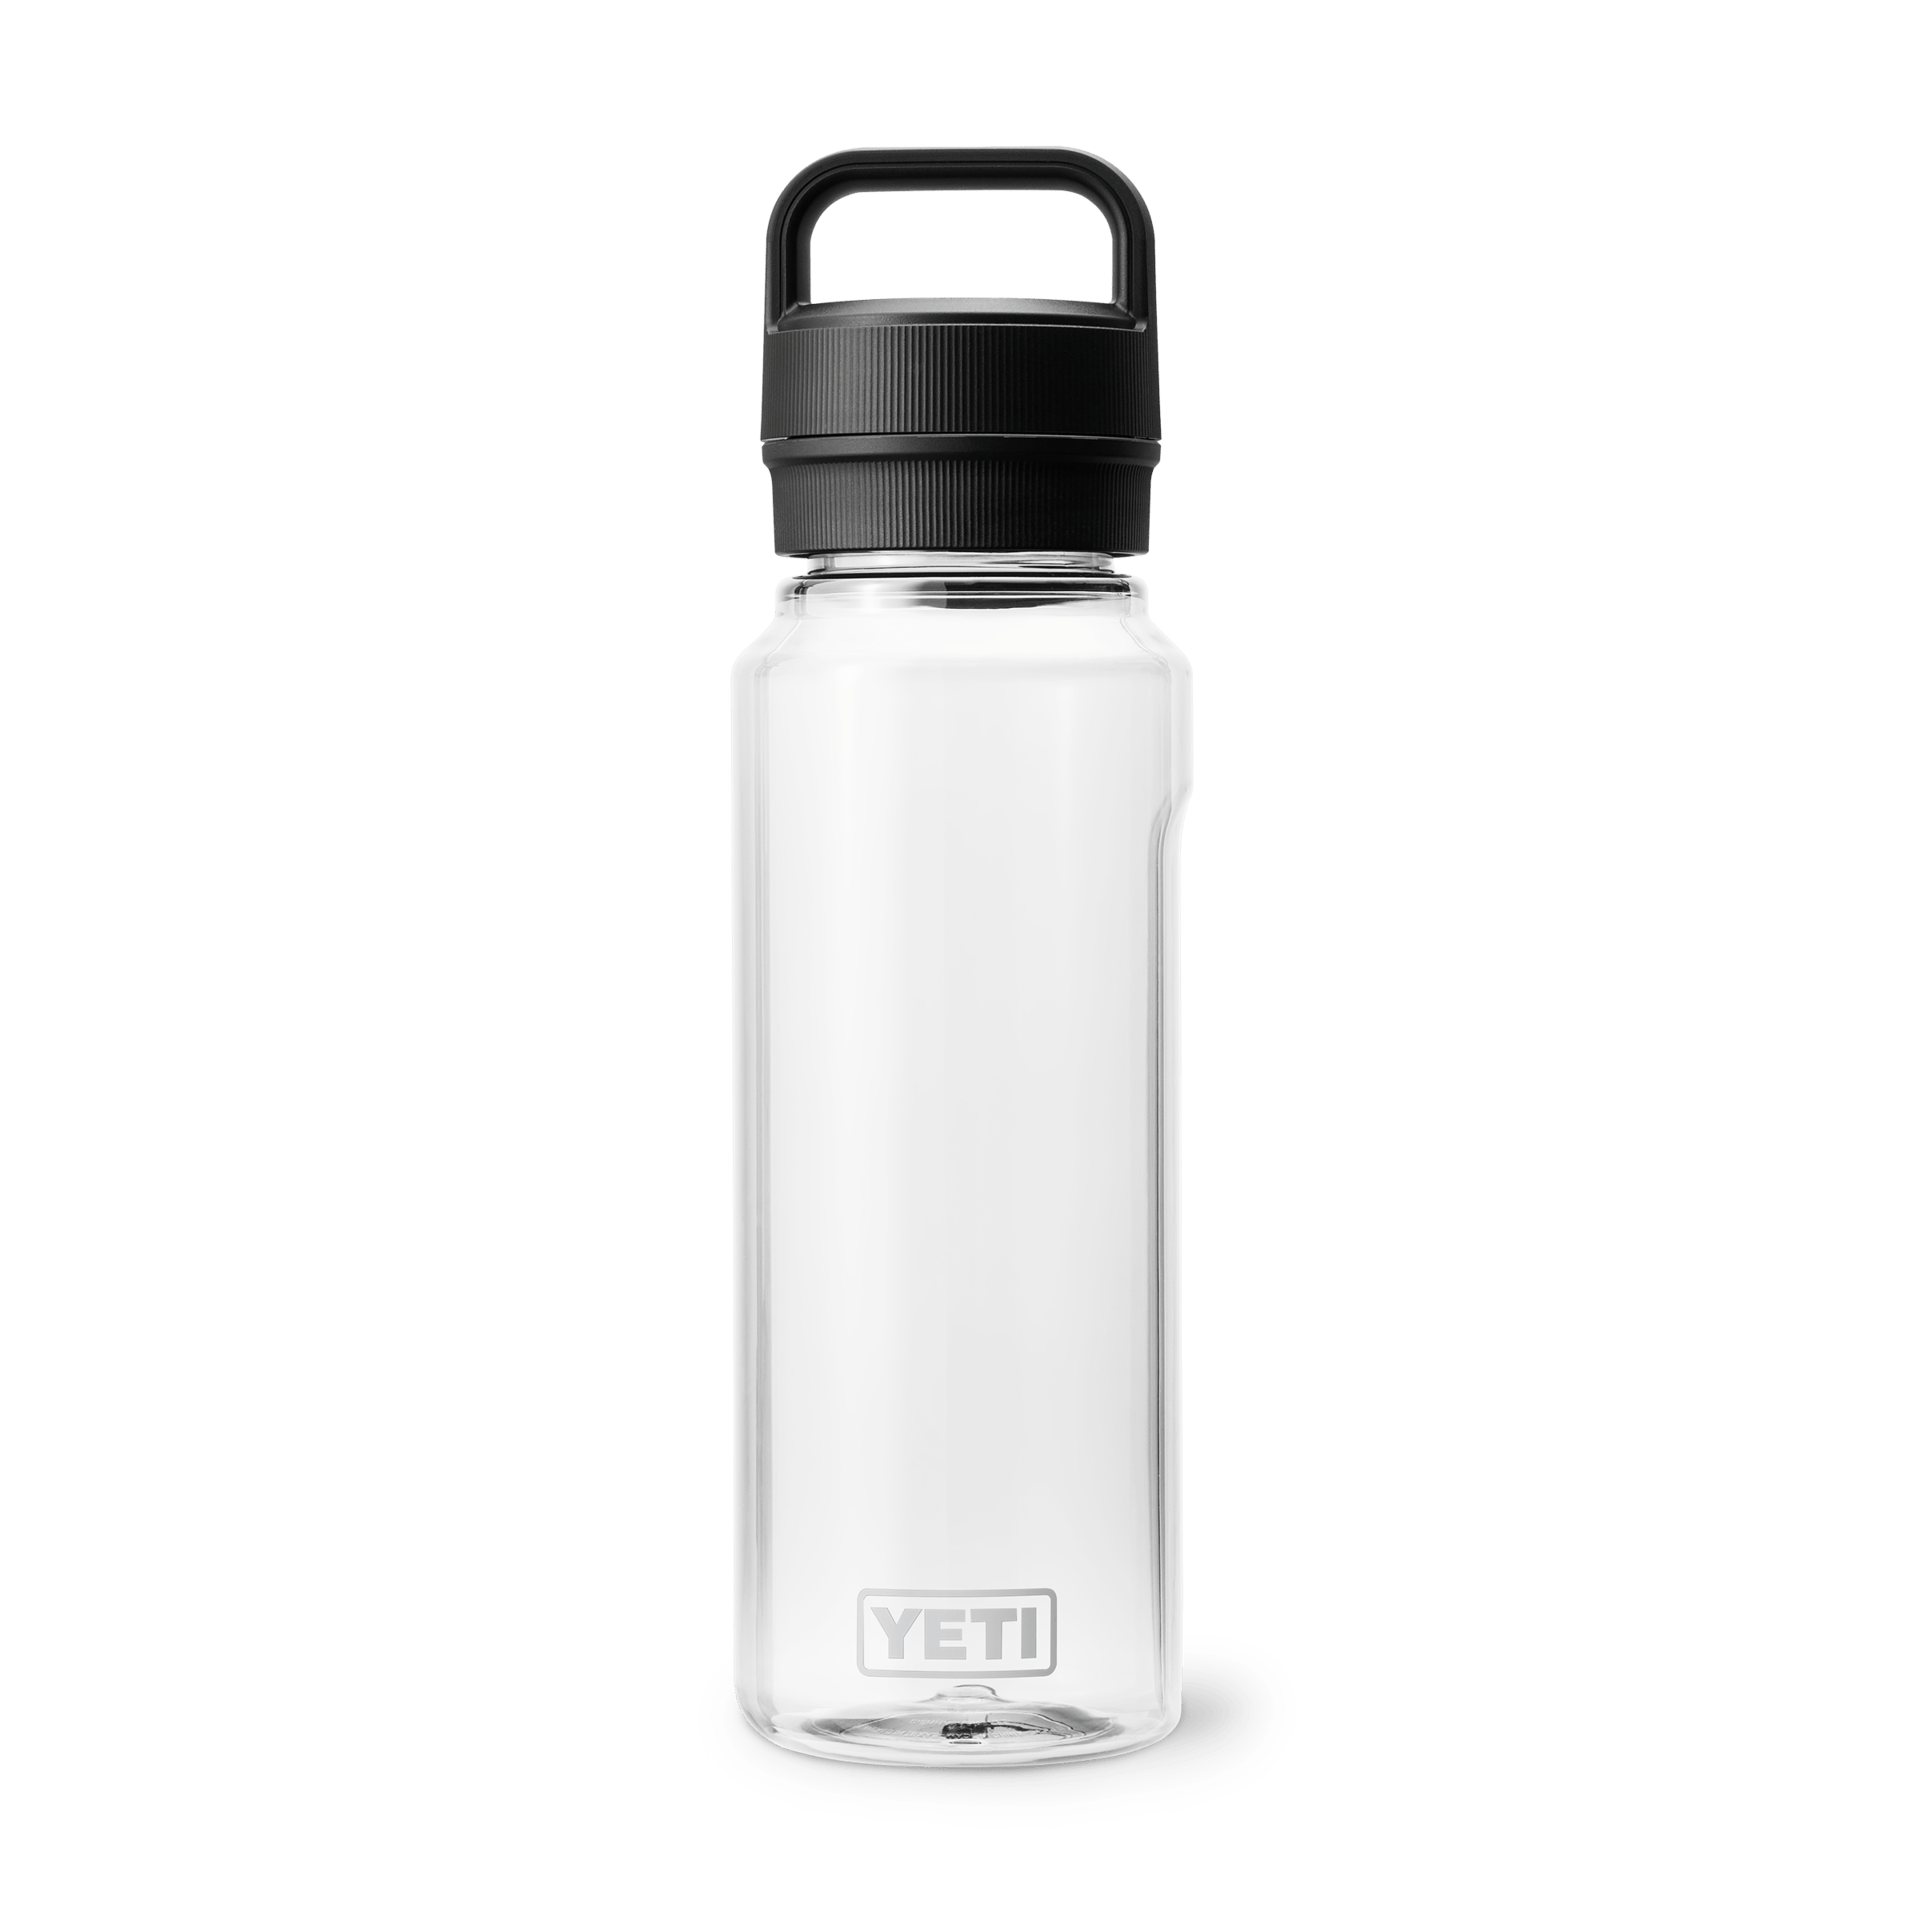 Yeti White Rambler Bottle with Chug Cap